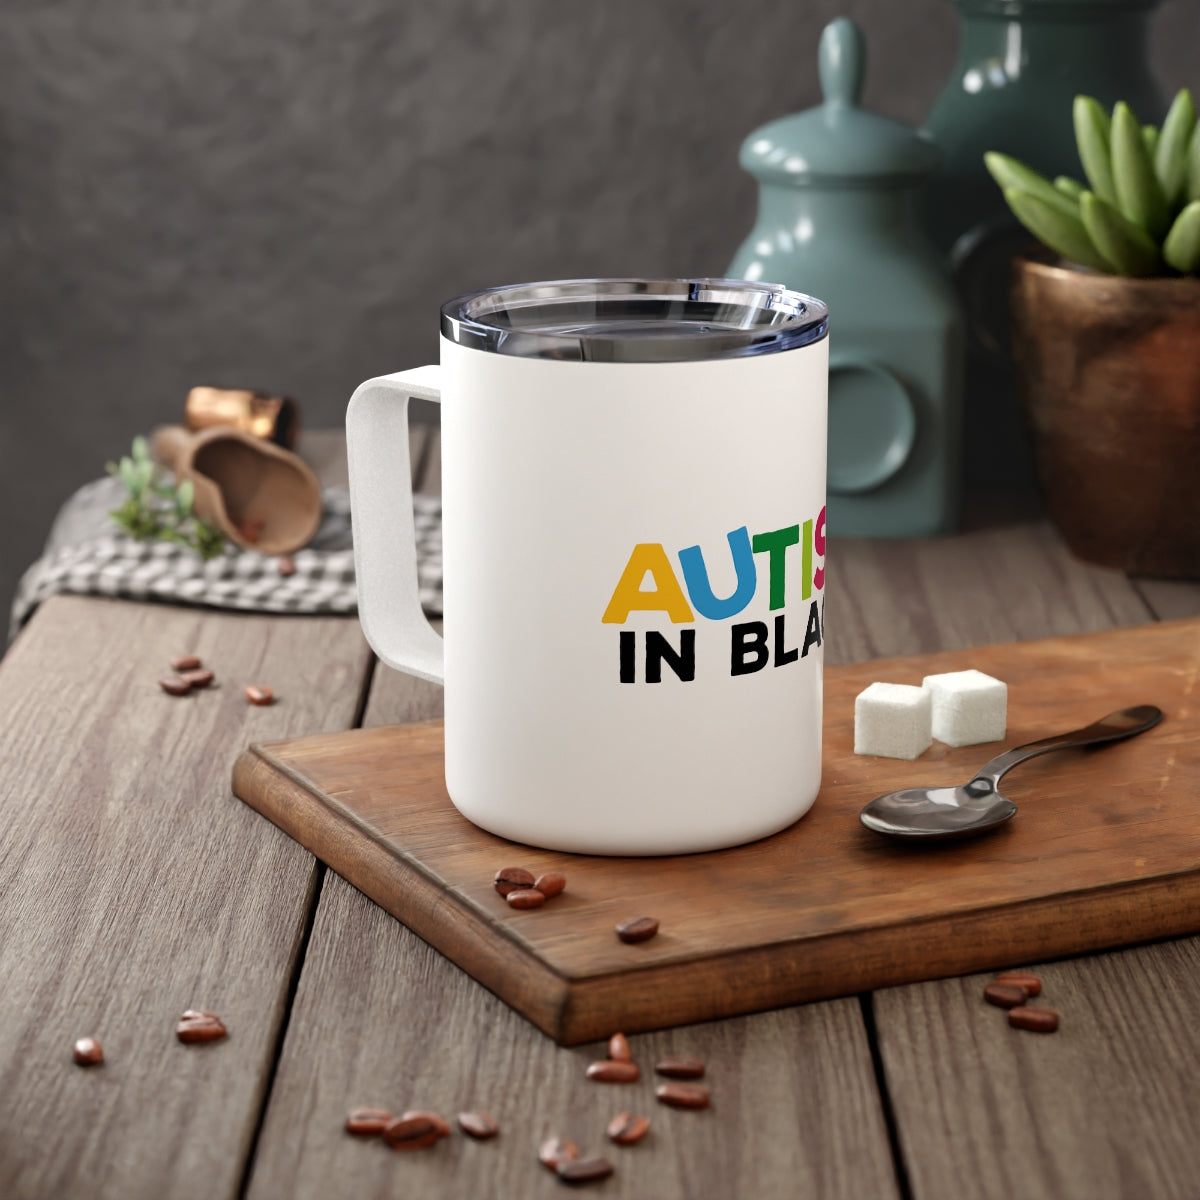 Autism in Black® Insulated Coffee Mug, 10oz